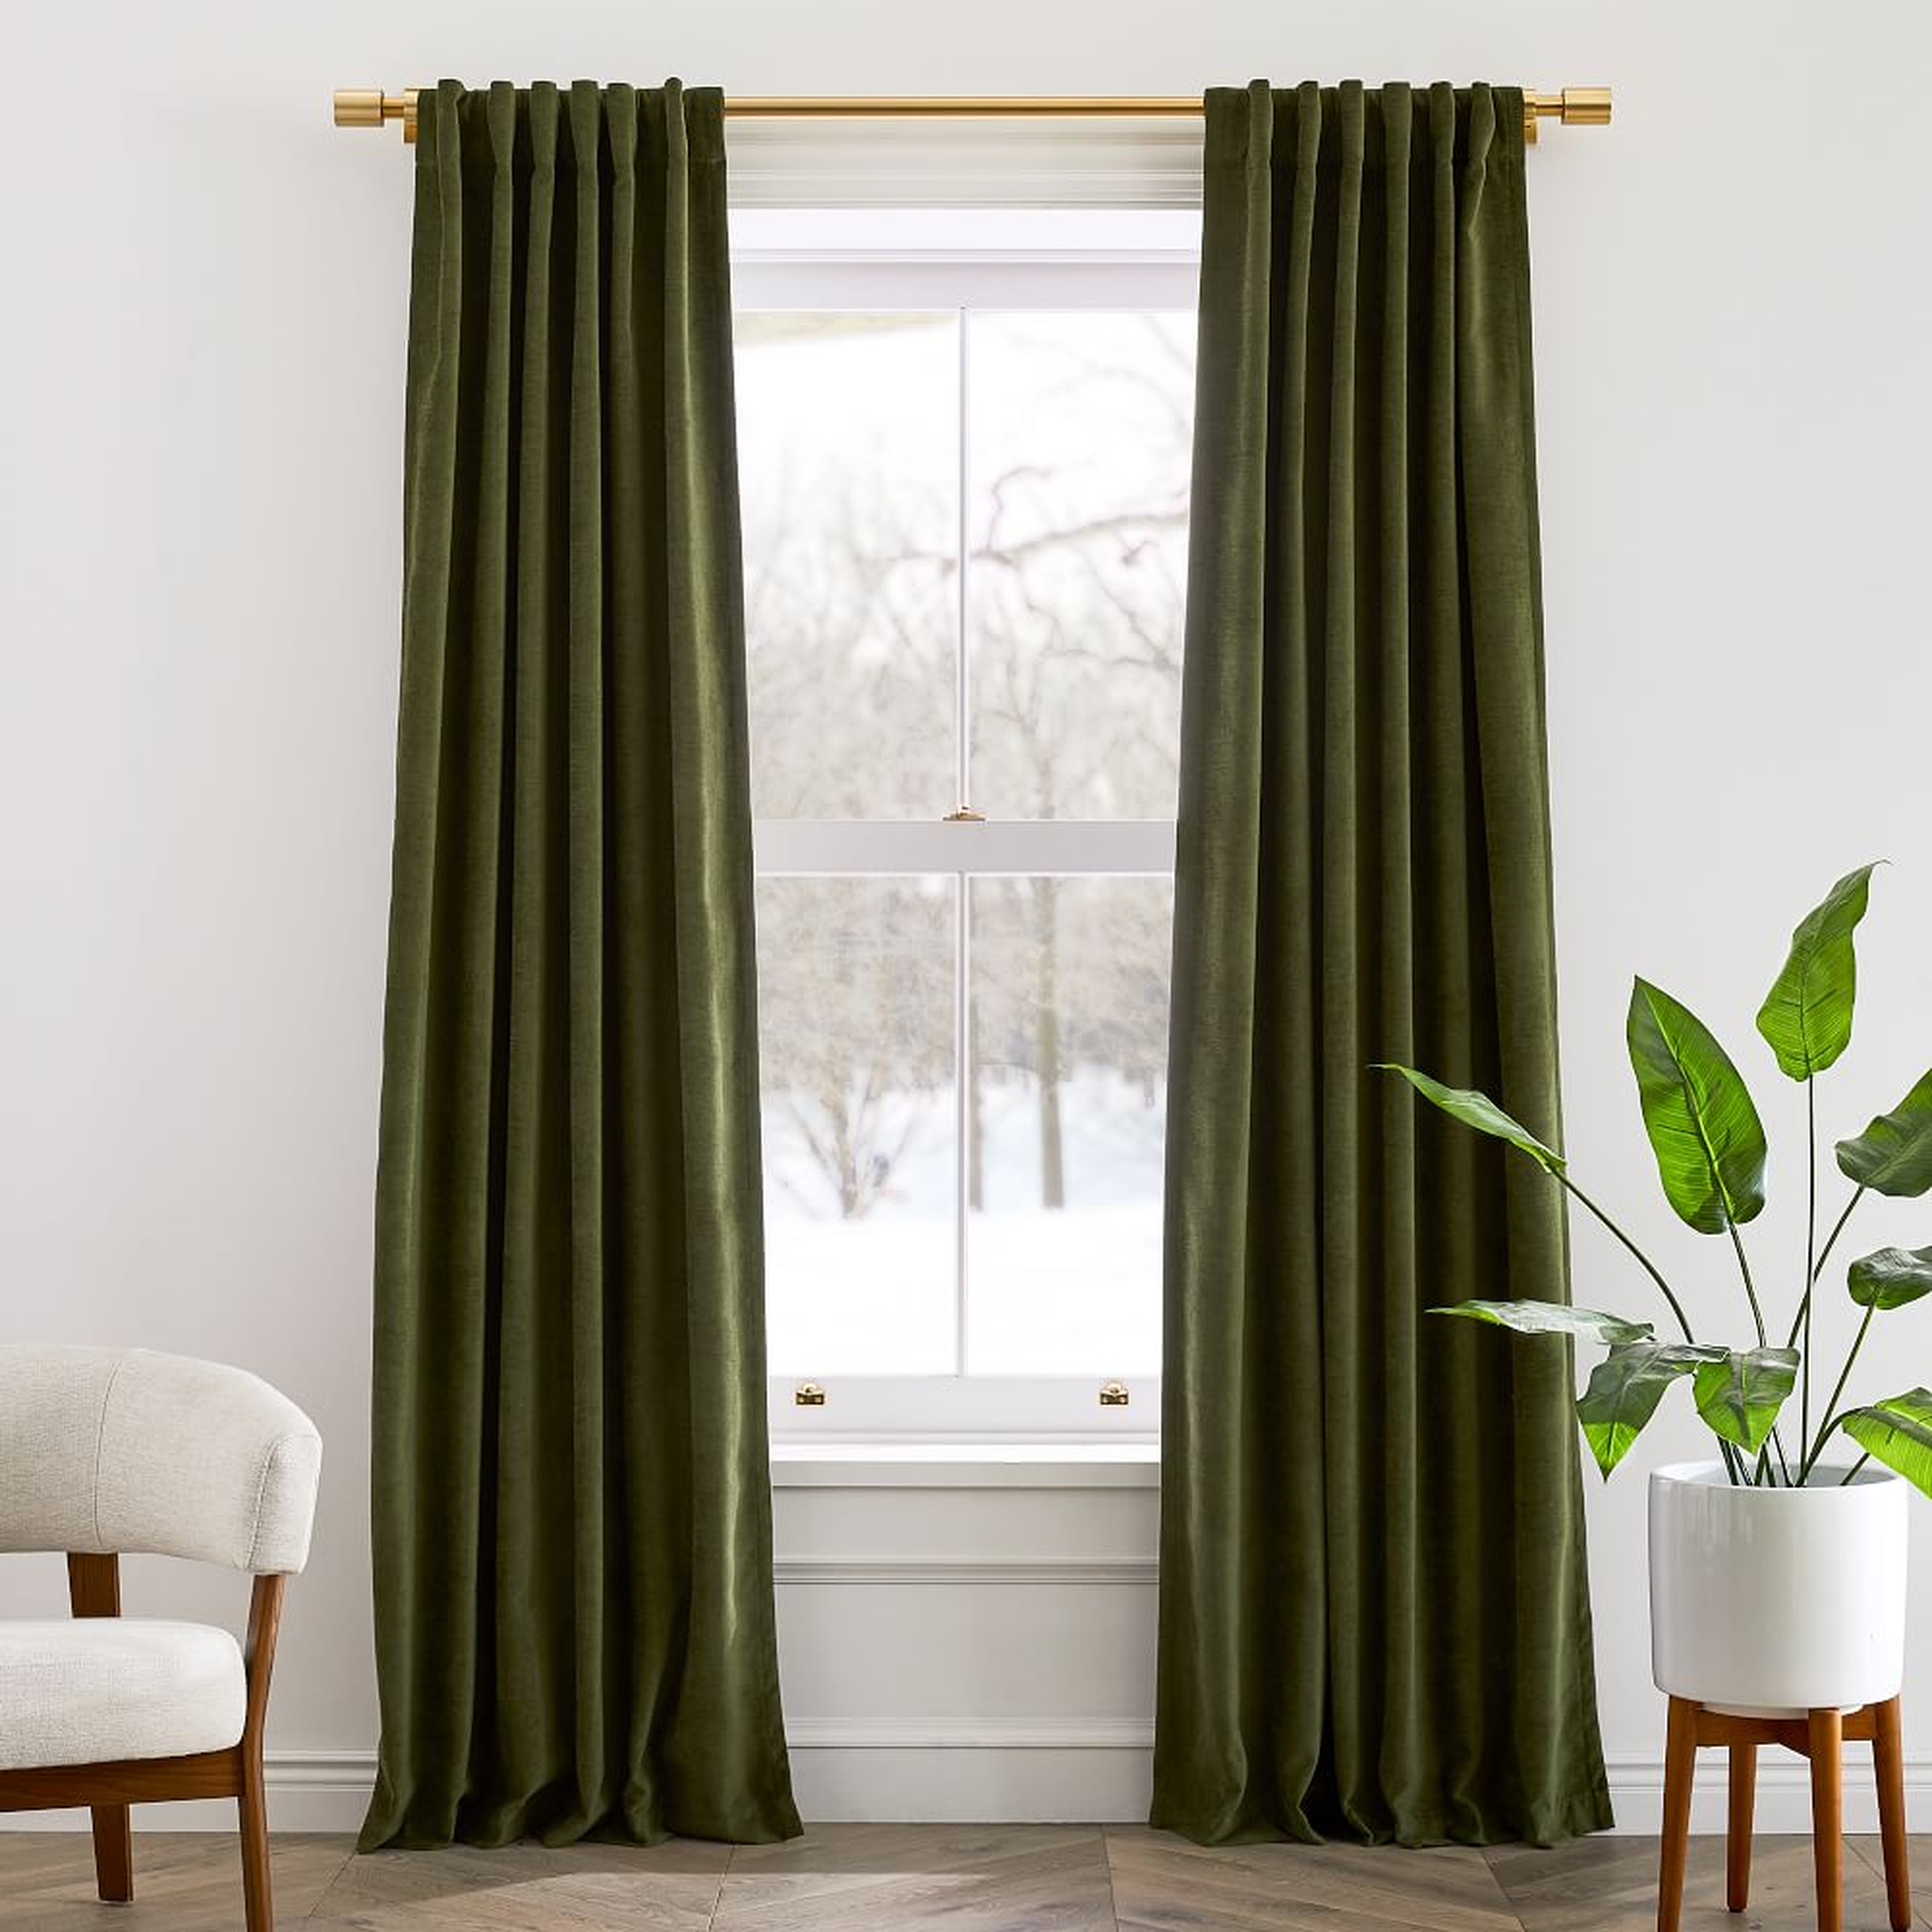 Worn Velvet Curtain with Cotton Lining, Tarragon, 48"x96", Set of 2 - West Elm